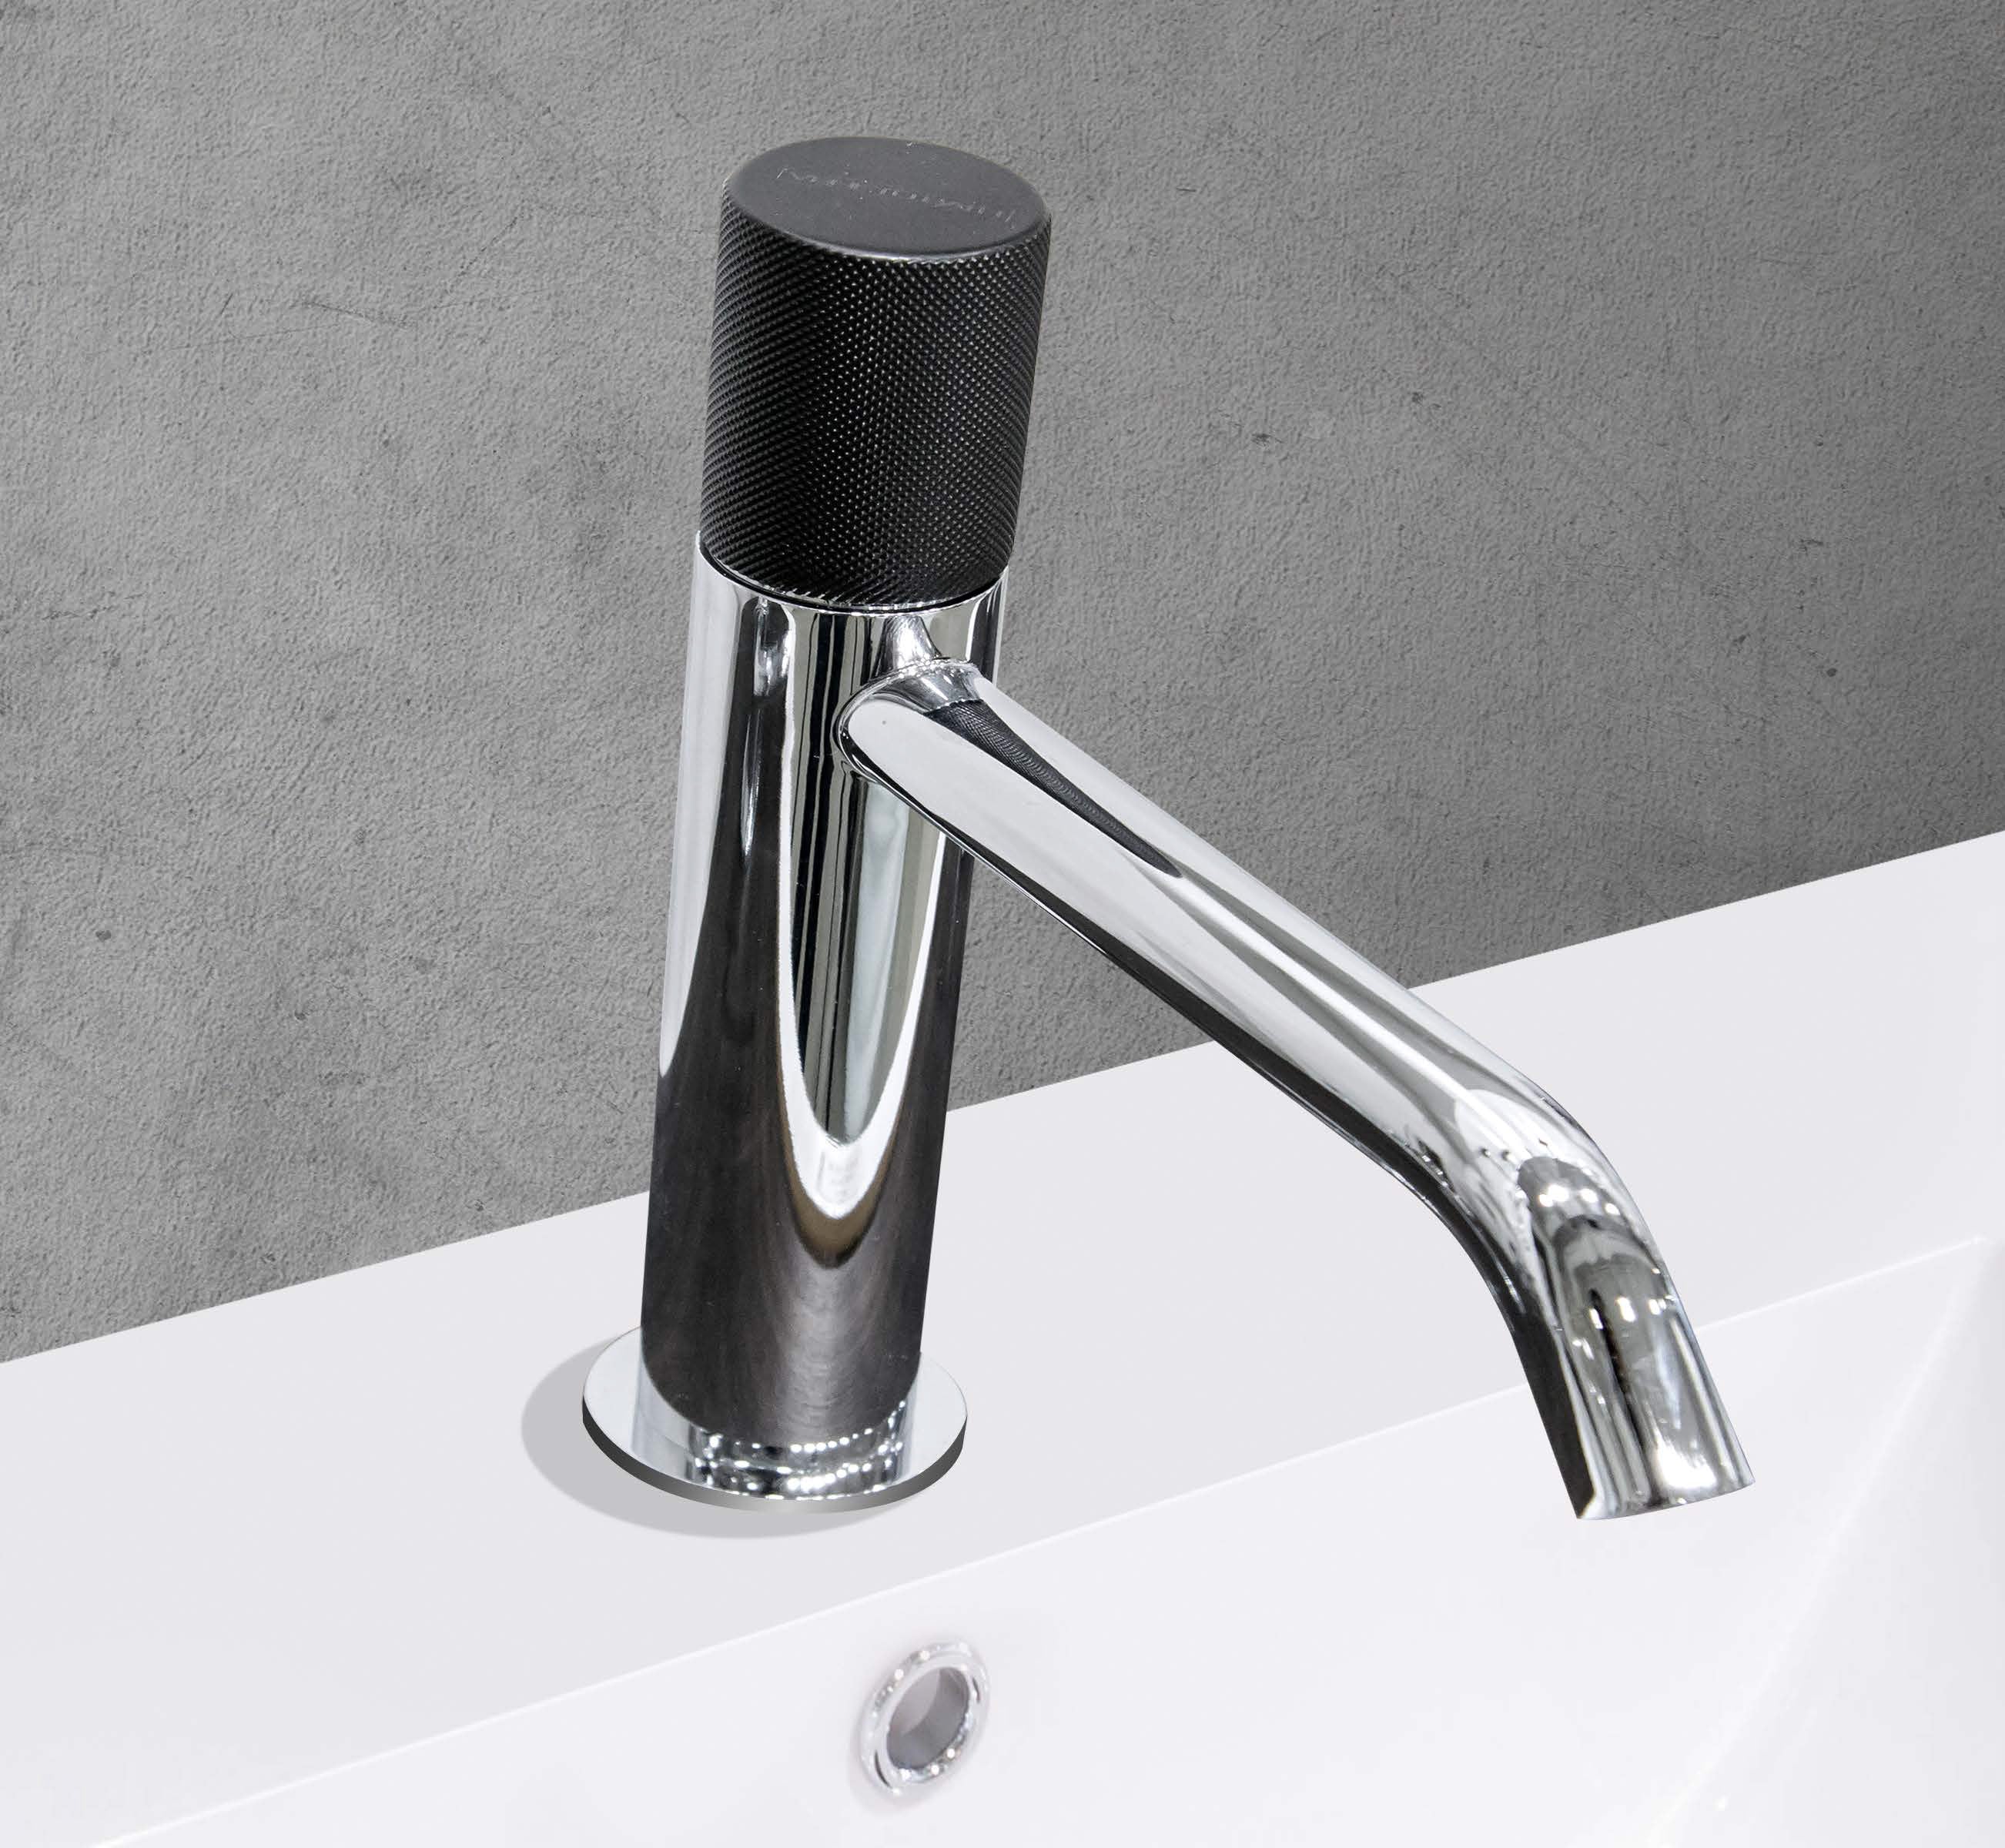 Jack 2.0 Bathroom Faucet Chrome